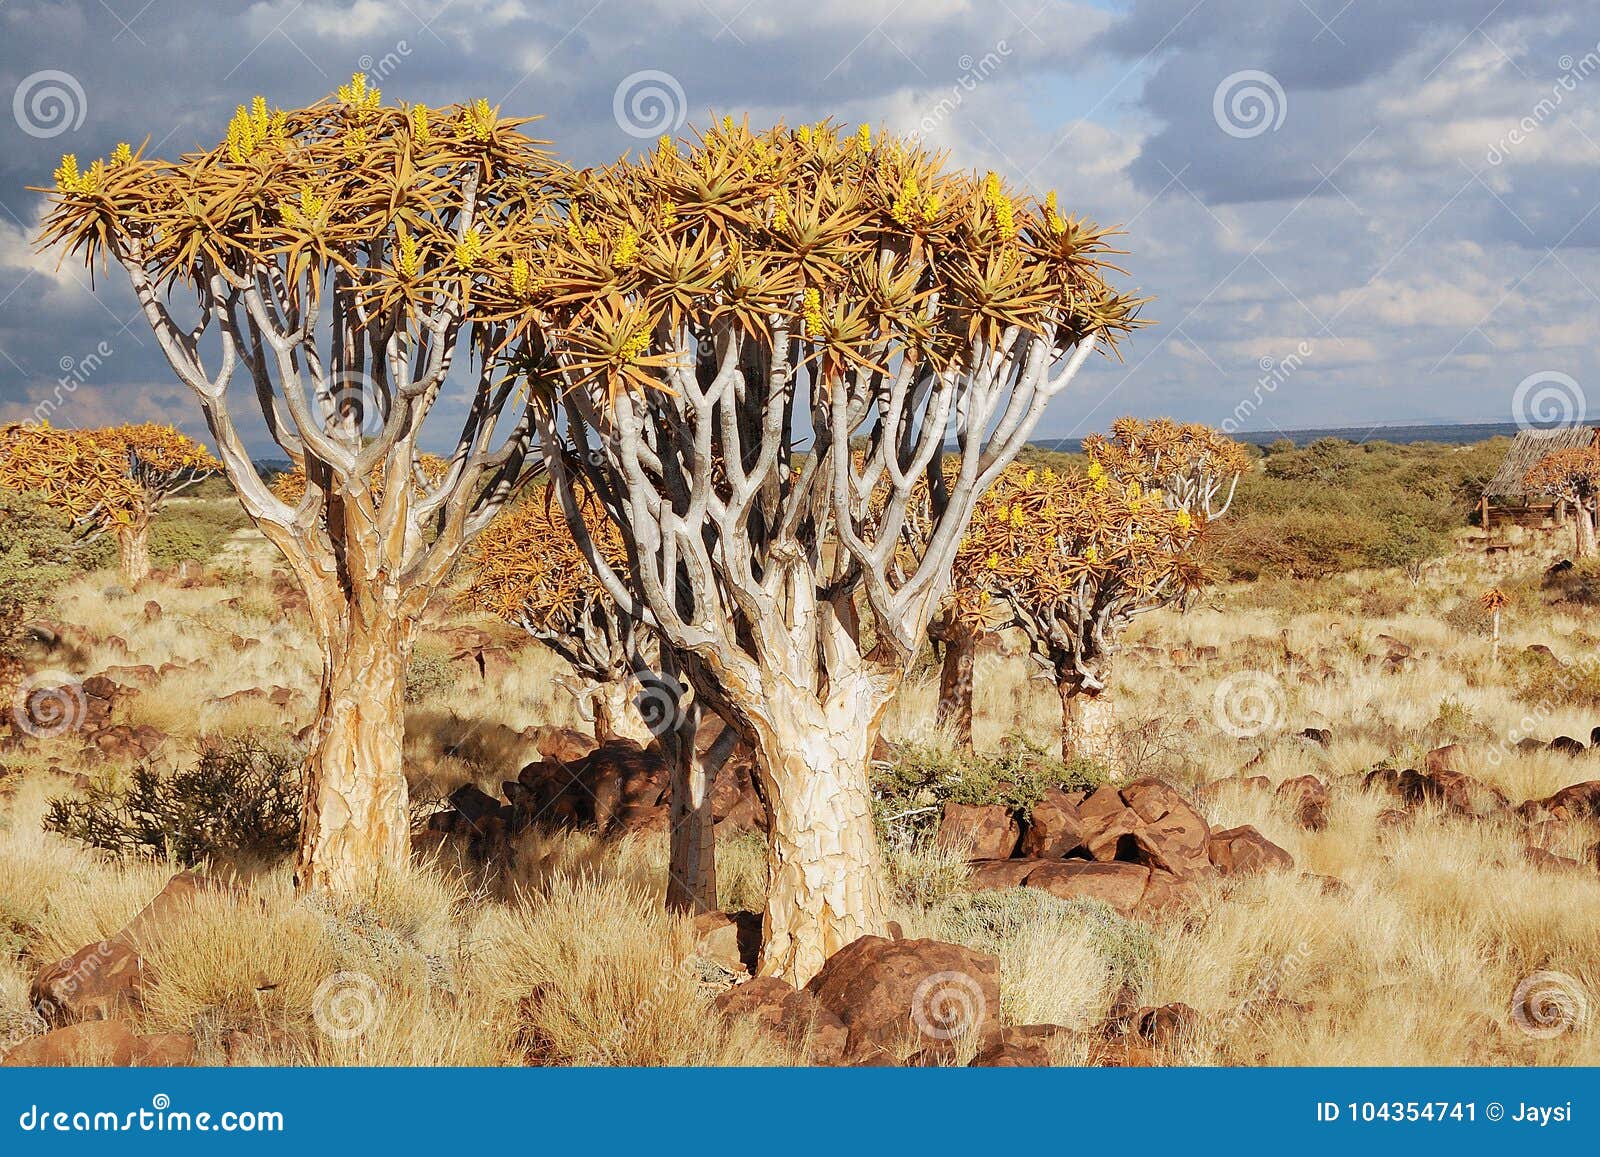 Rationel opdragelse kanal African Landscape of Quiver Tree Forest, Kokerbooms in Namibia, Nature of  Africa Stock Image - Image of desert, light: 104354741